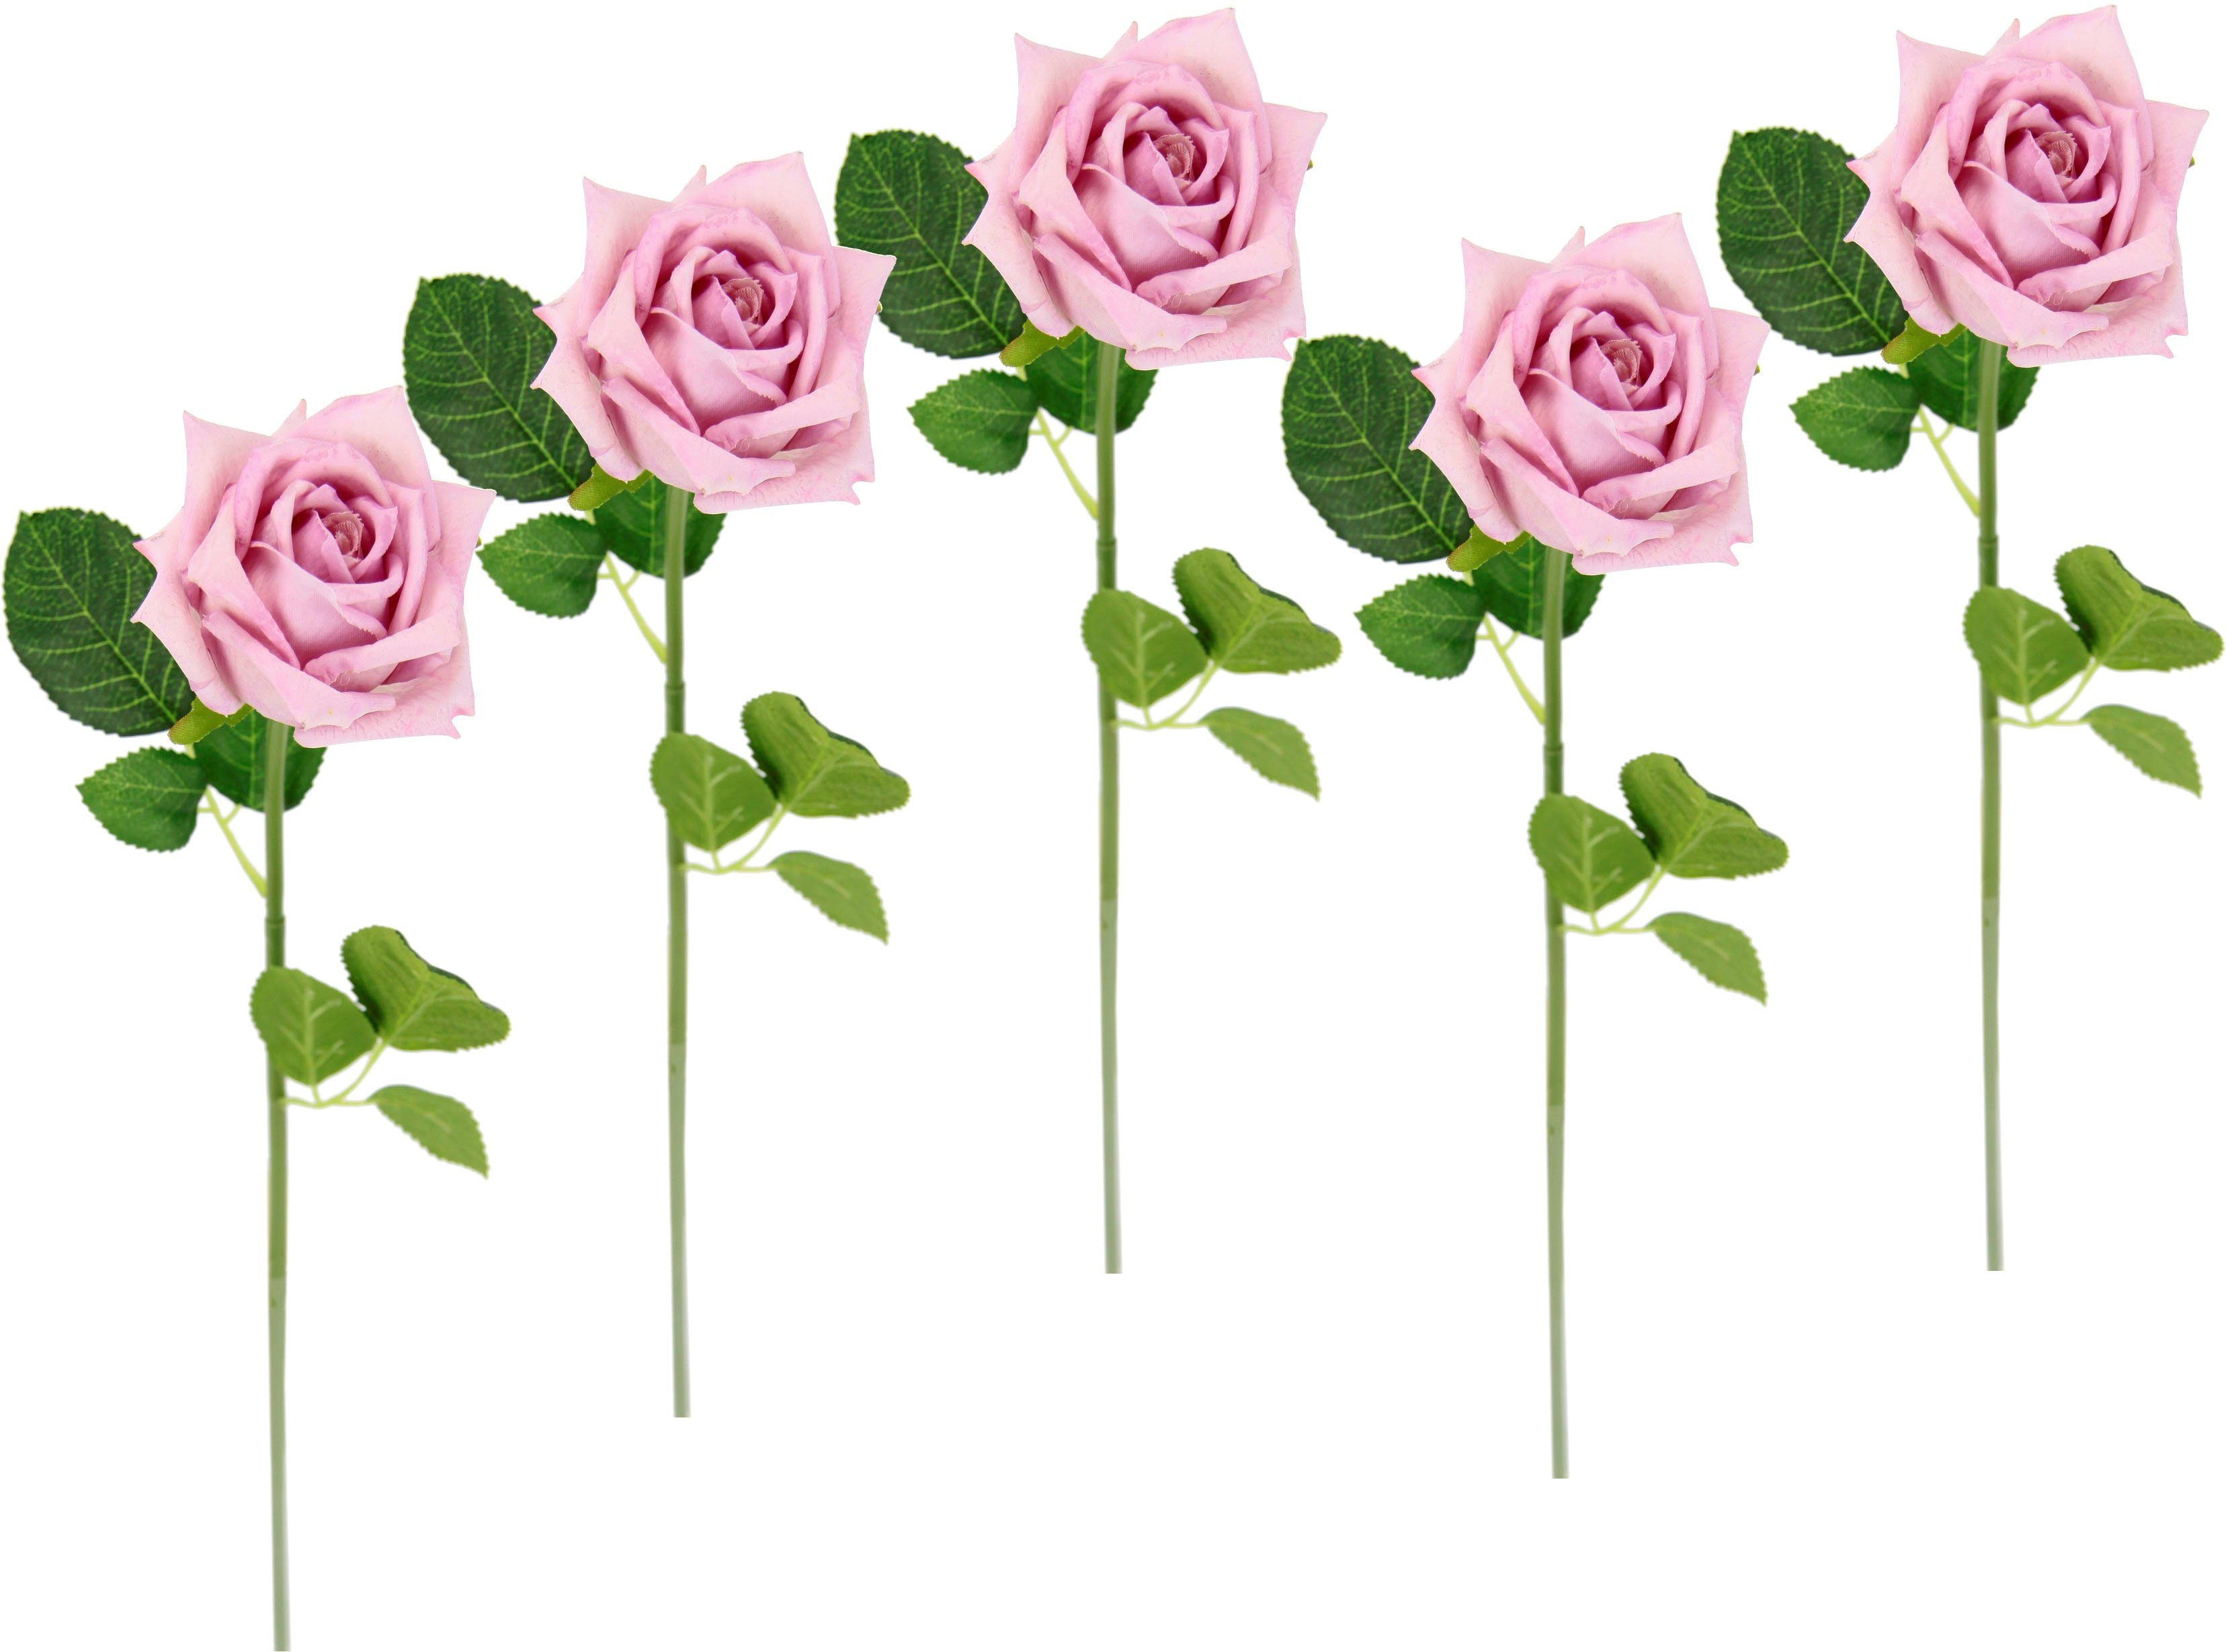 Kunstblume Rose, I.GE.A., Höhe 45 cm, 5er Set künstliche Rosen, Seidenrosen, Bouquet, Kunstzweig, Kunstrose rosa | Kunstblumen